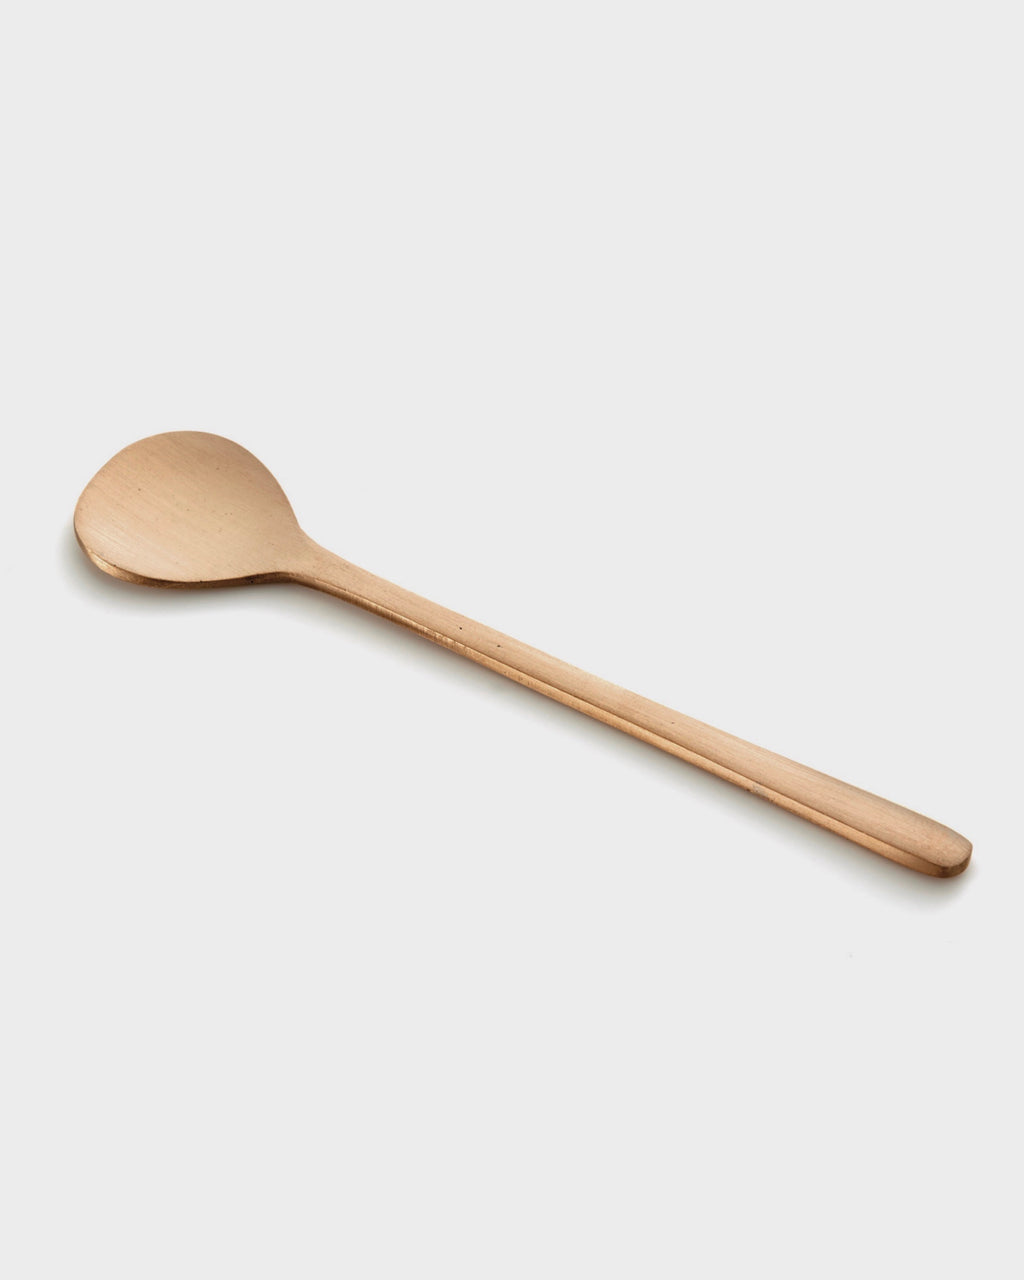 Brass Dessert Spoon